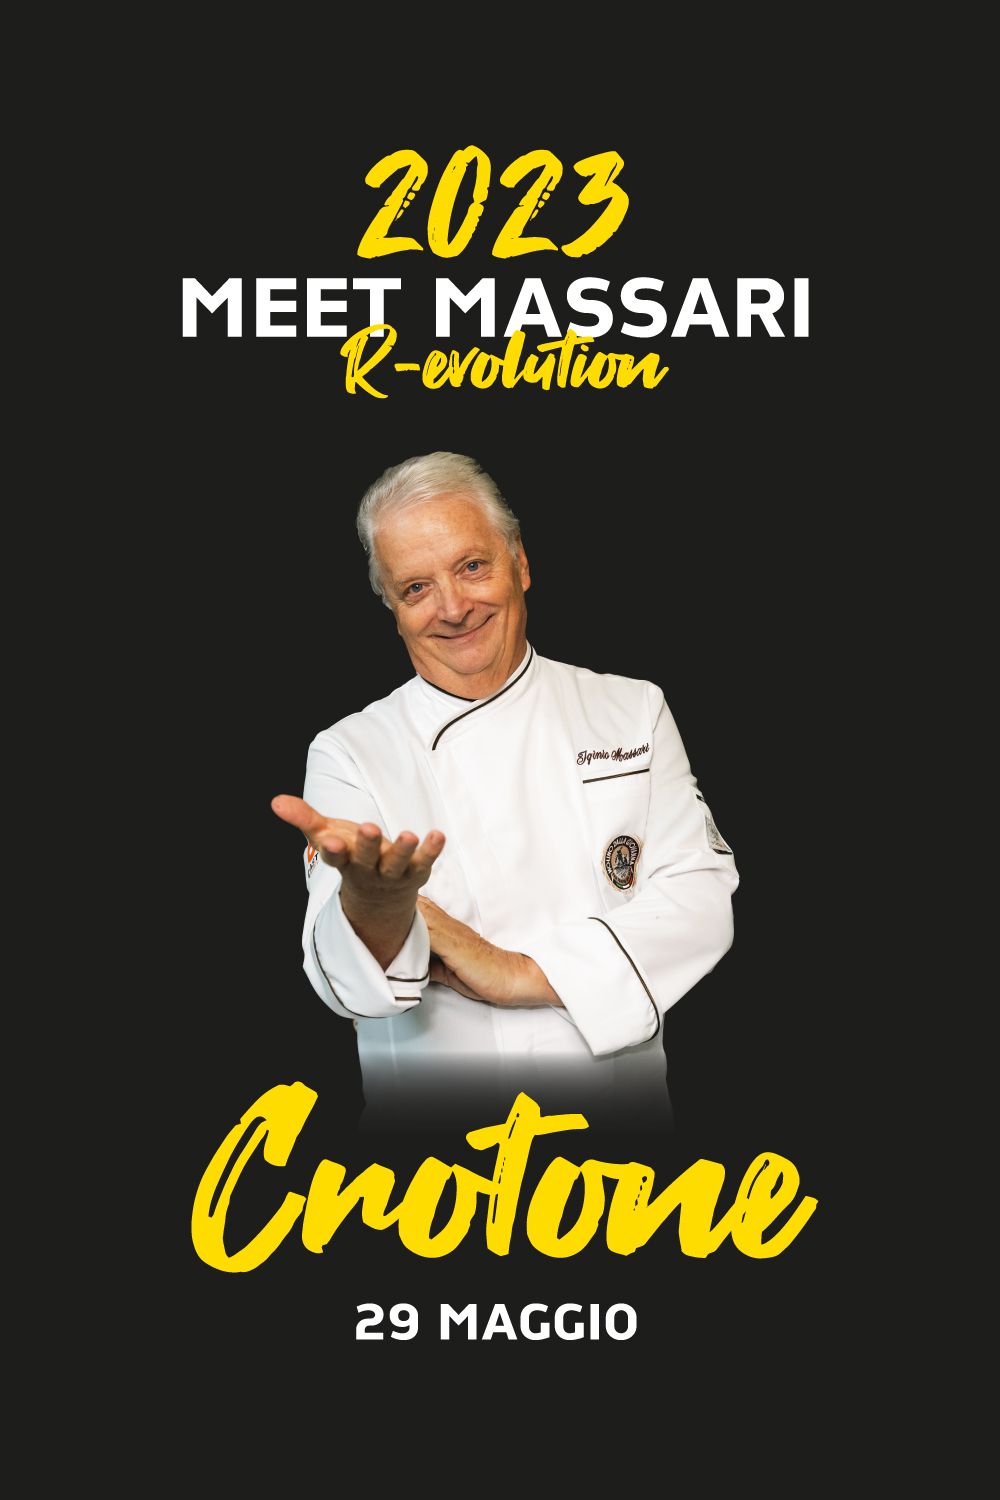 Meet Massari R-evolution 2023 Calabria